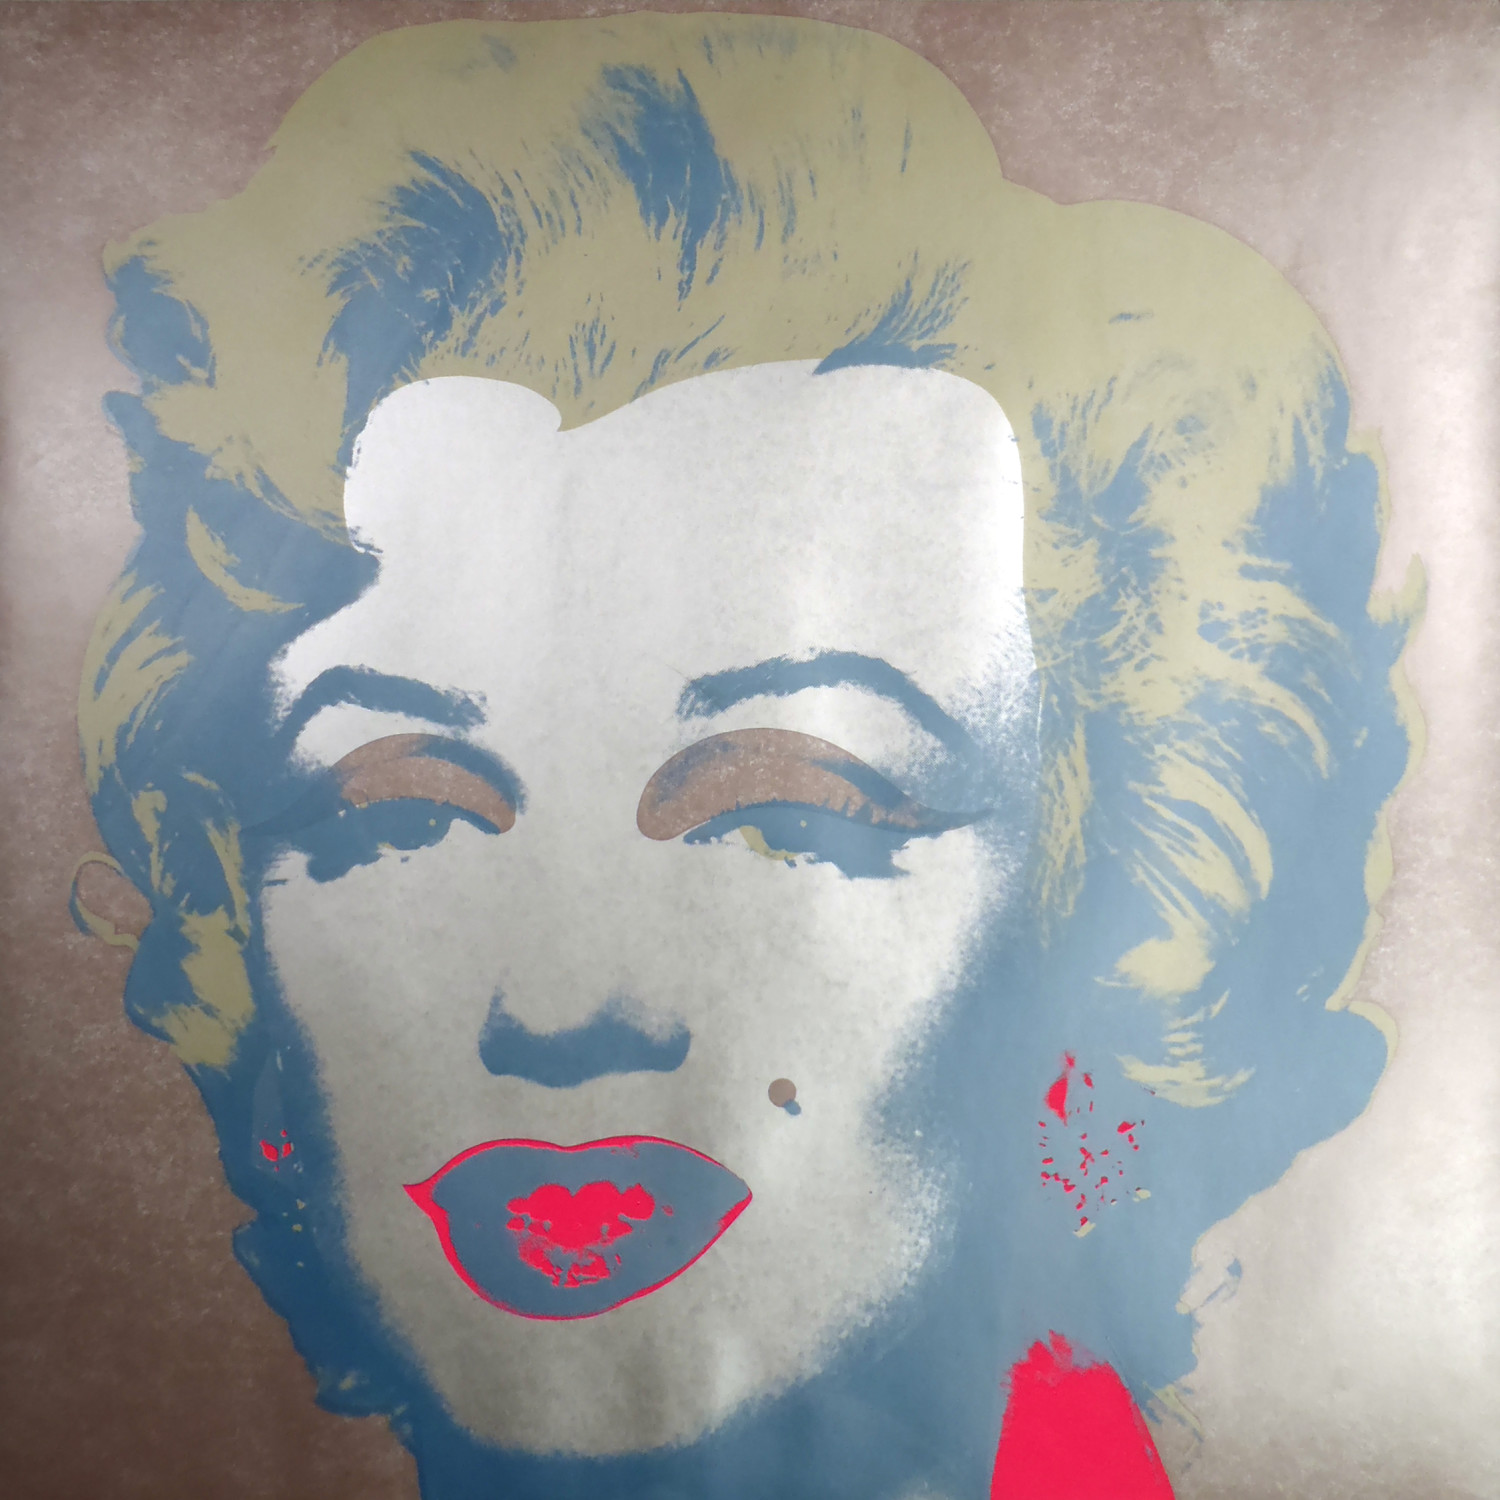 Andy Warhol | Marilyn Monroe 26 | 1967 | Image of Artists' work.